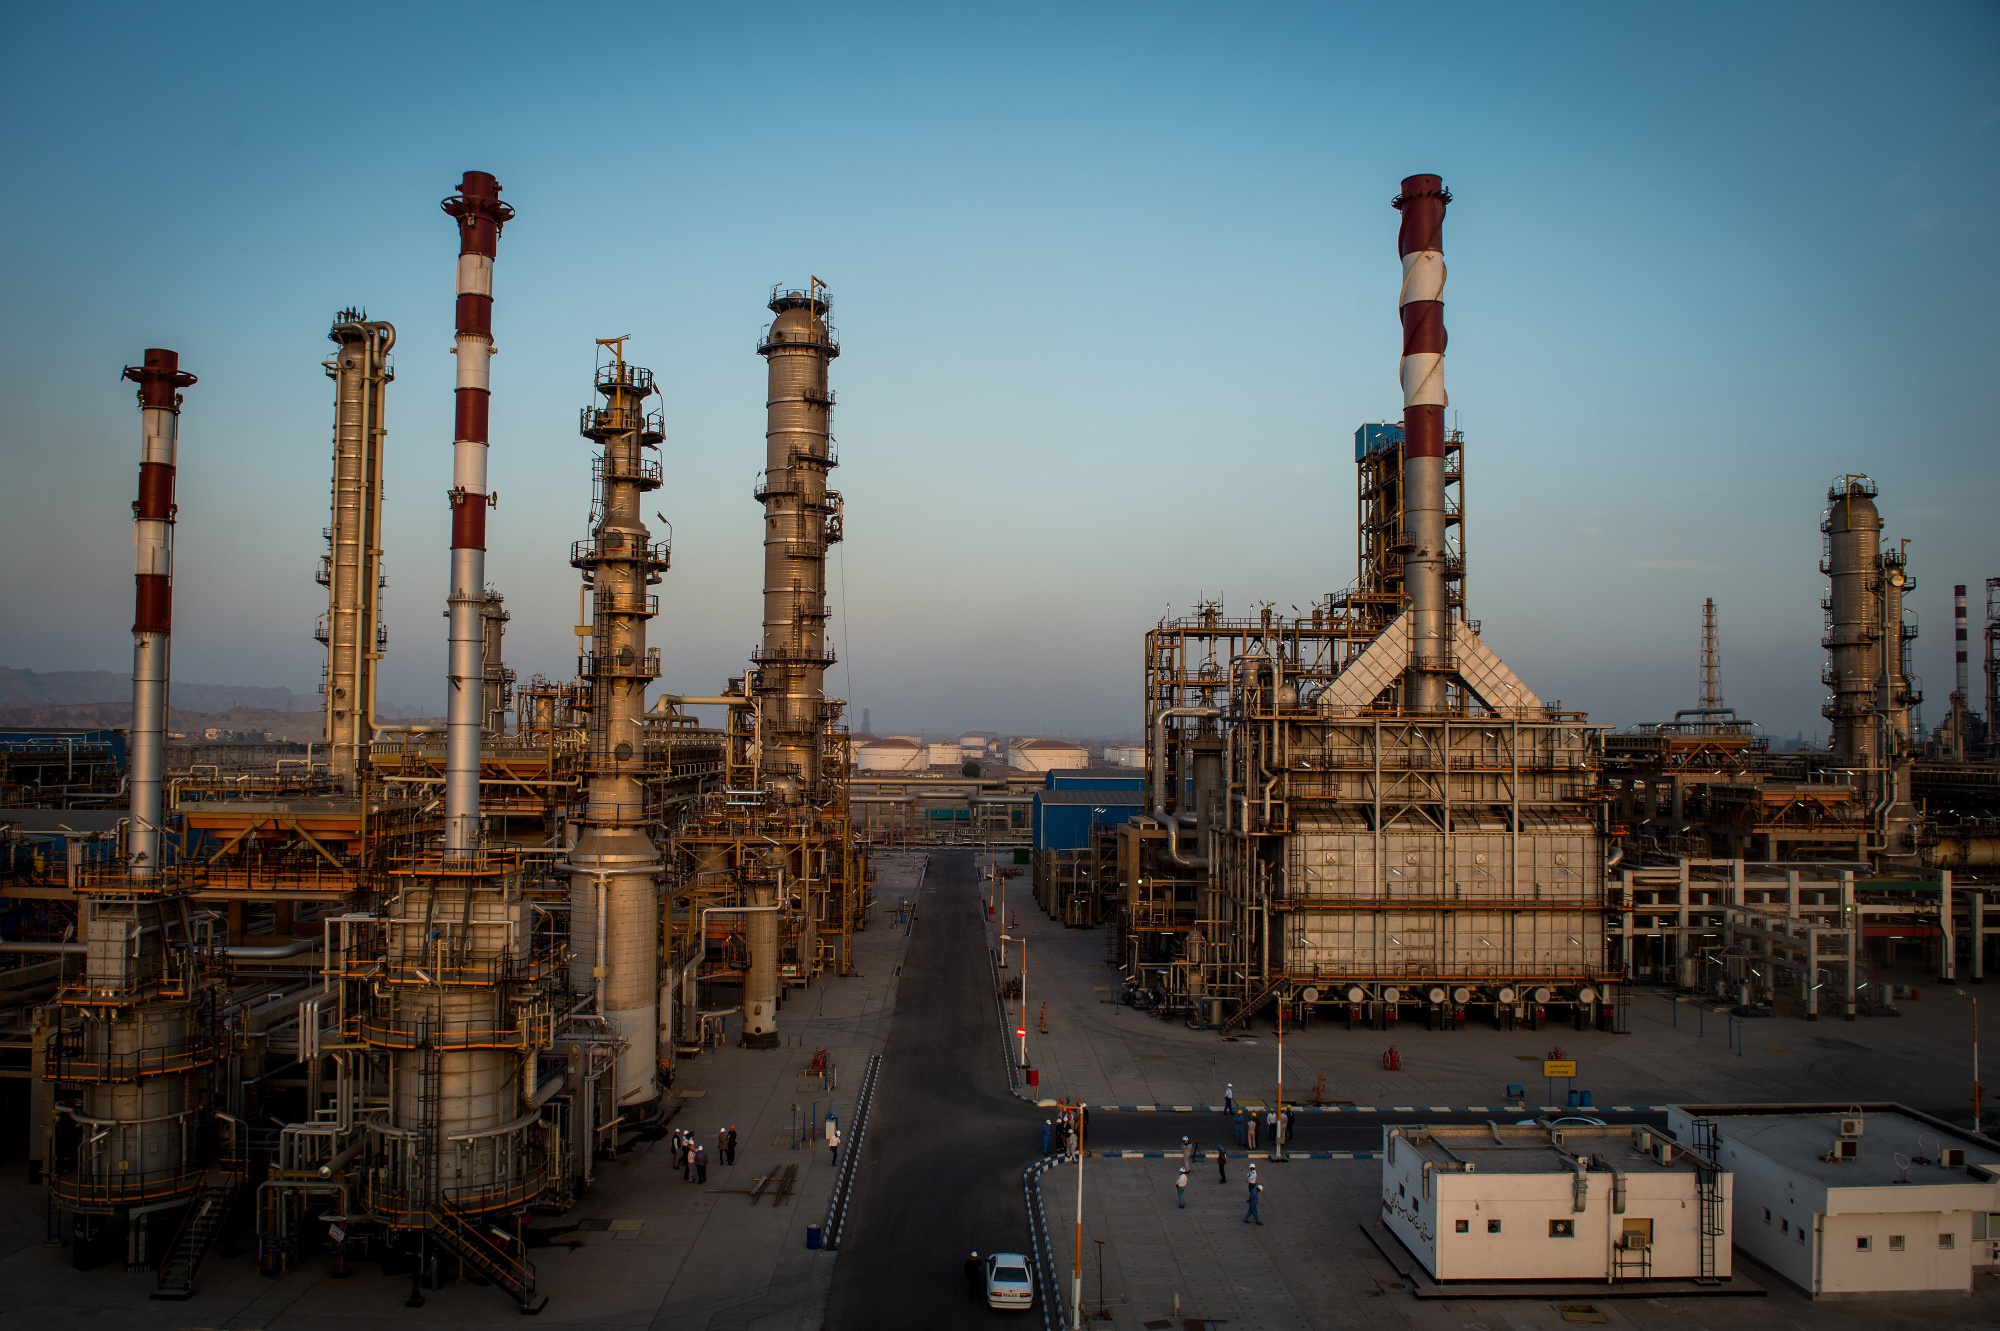 A gas condensate refinery in Bandar Abbas, Iran in 2019.